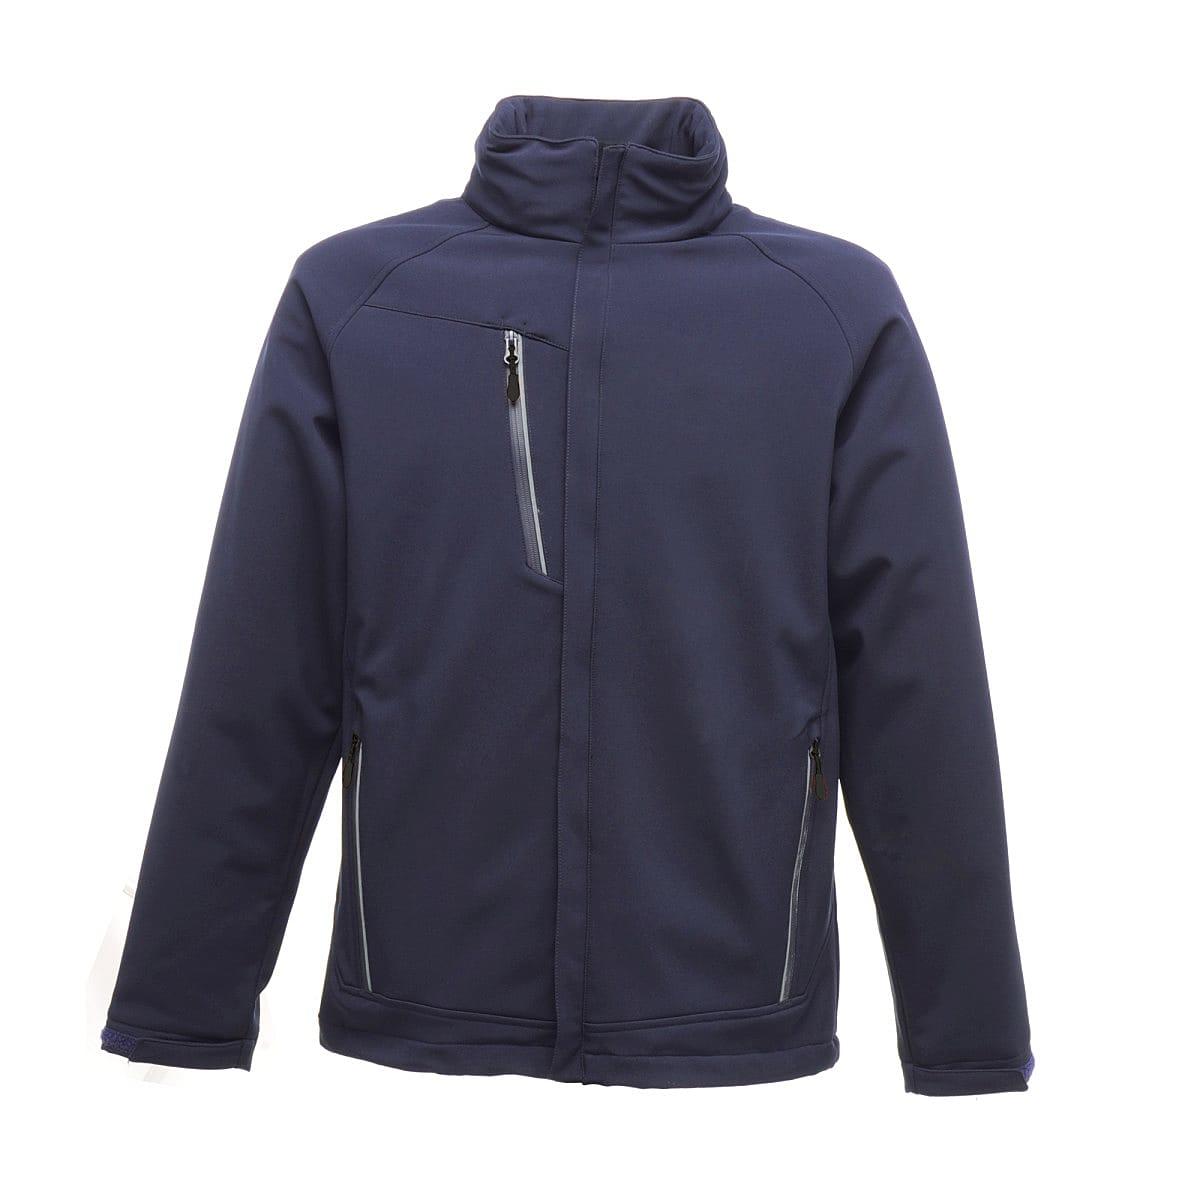 Regatta Apex Waterproof Softshell Jacket in Navy Blue (Product Code: TRA670)